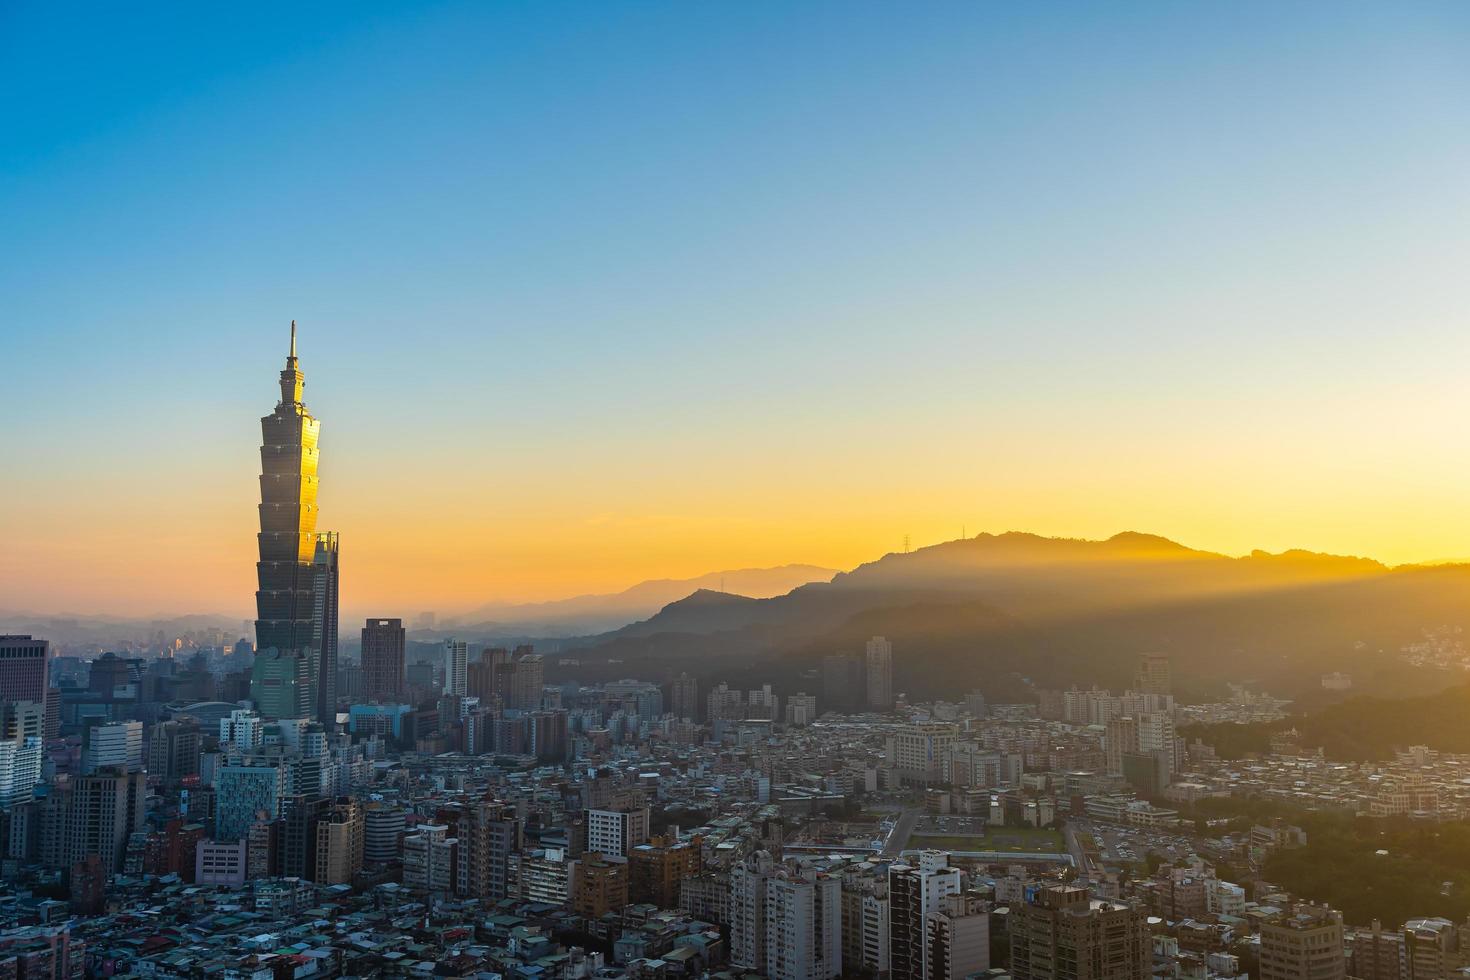 utsikt över Taipei stad i Taiwan foto